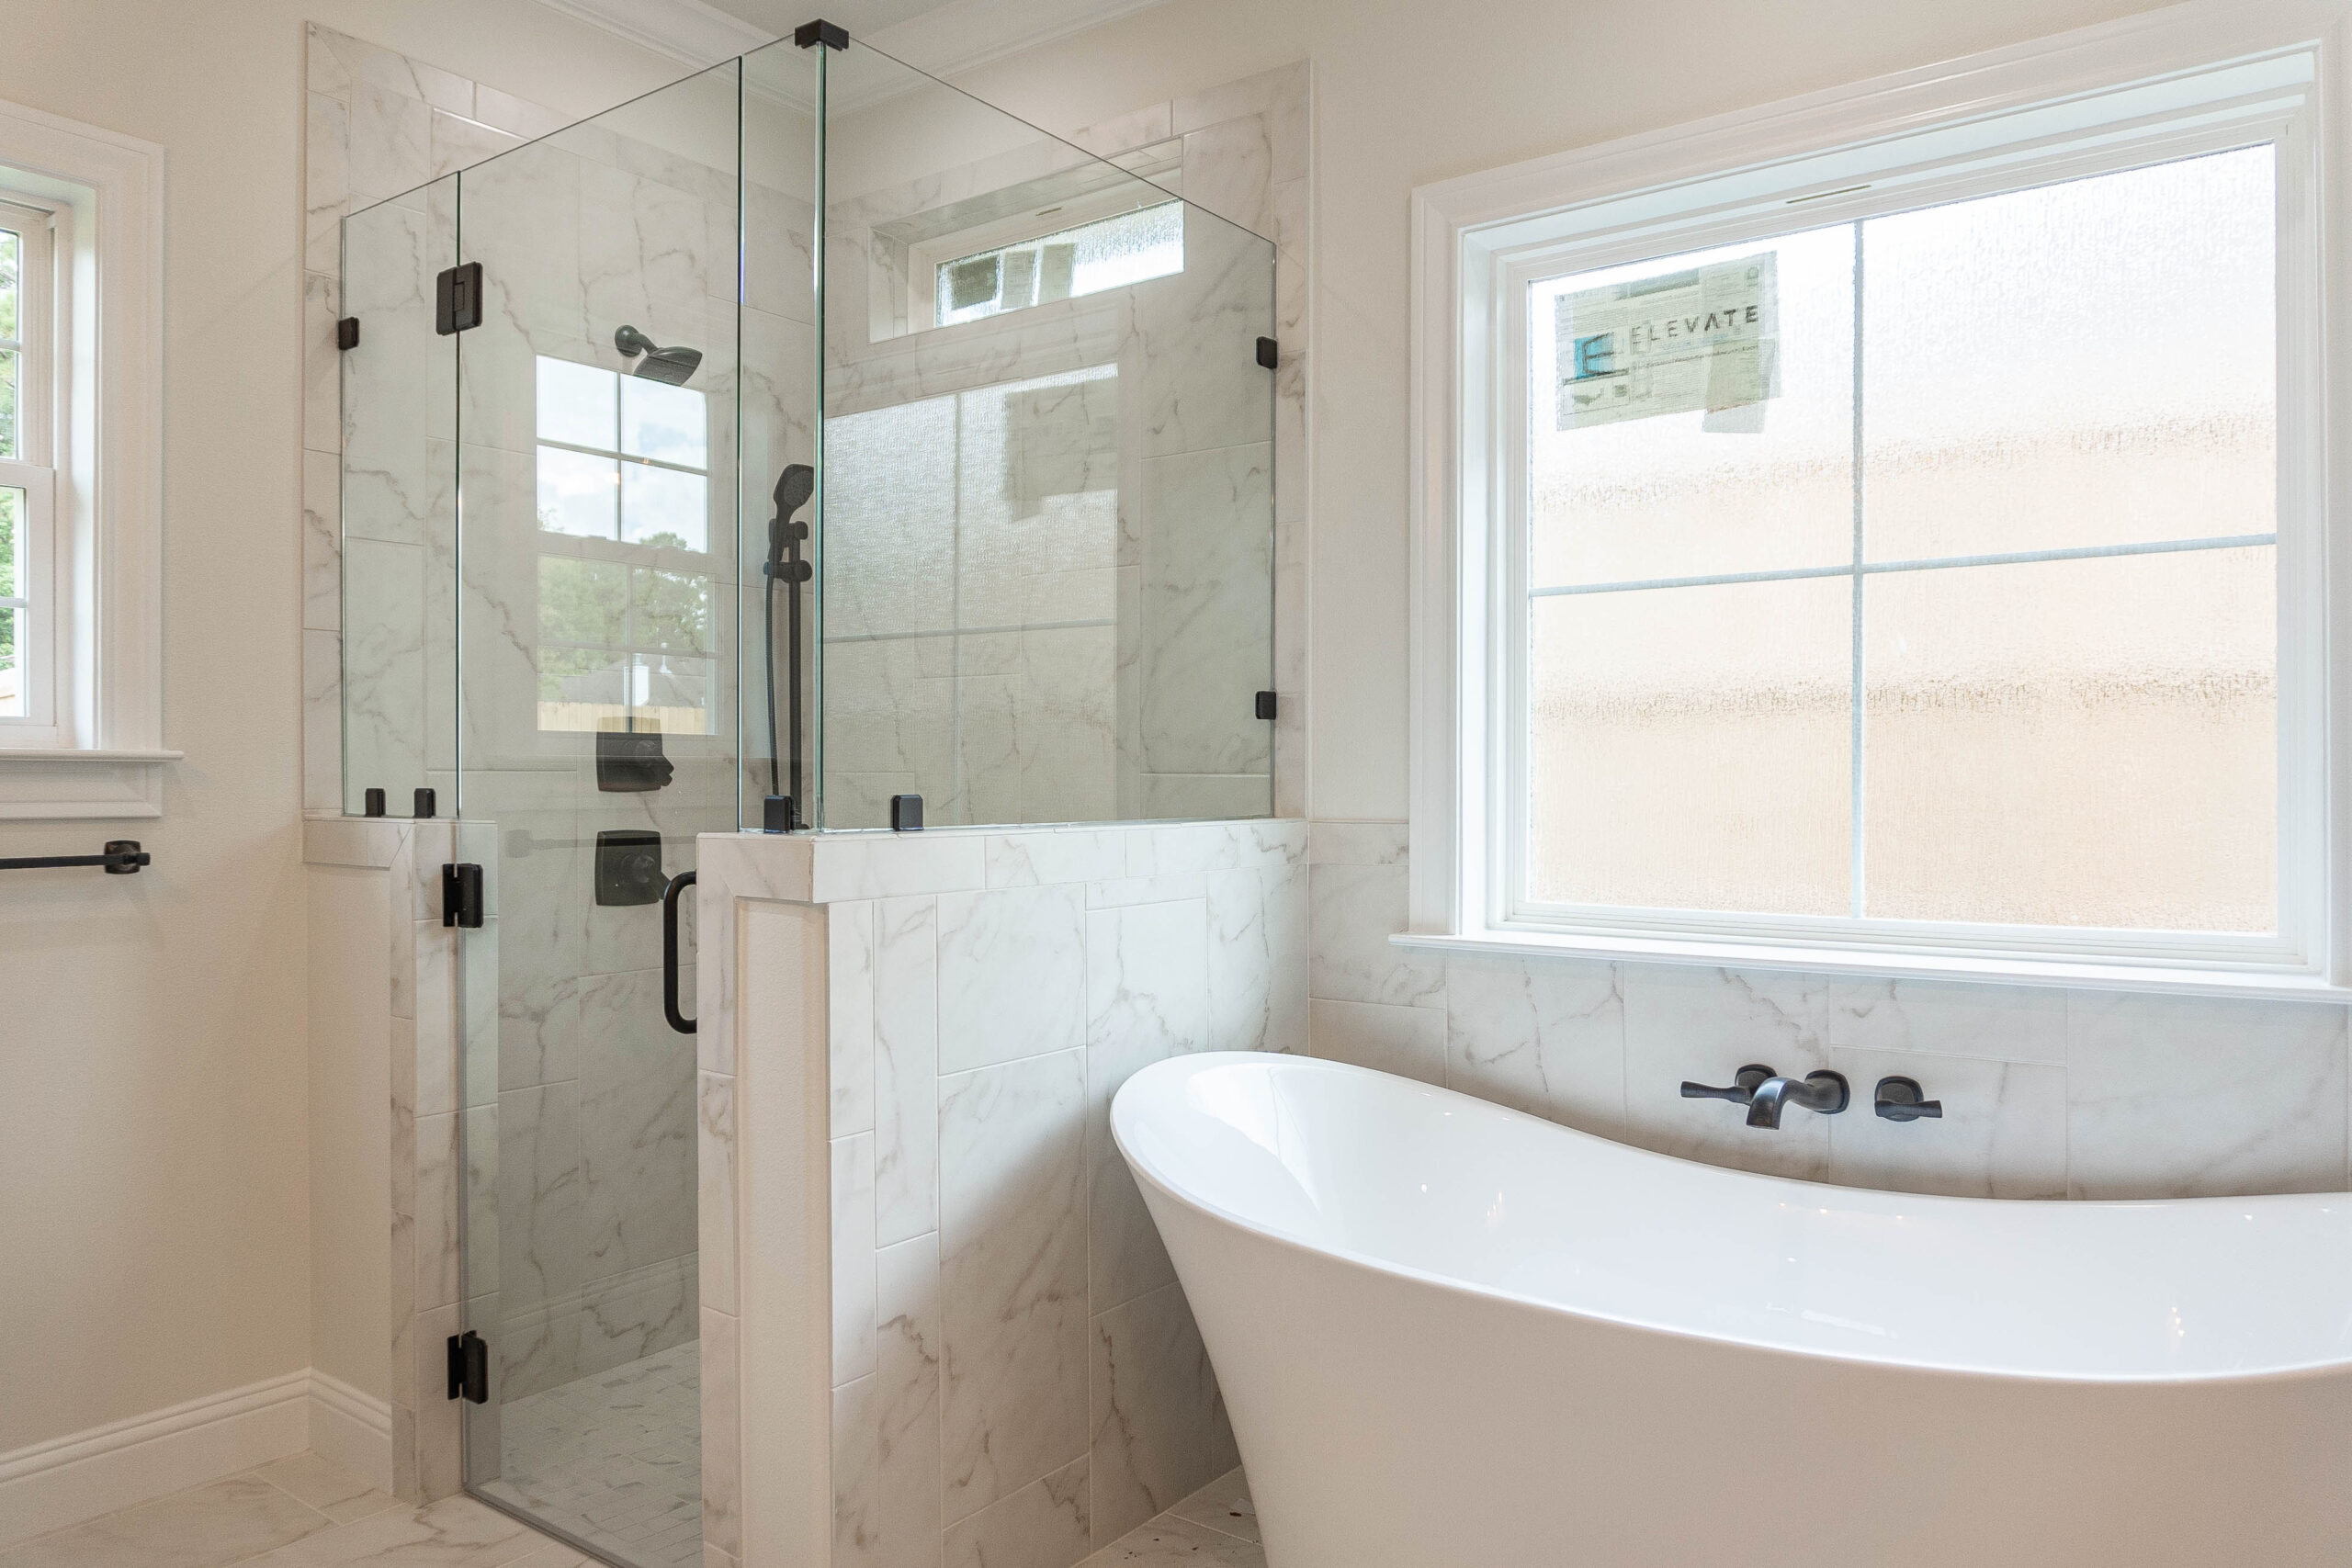 330 Hidden Grove master bathroom white tile flooring green shaker style cabinets free standing tub half tile wall glass shower